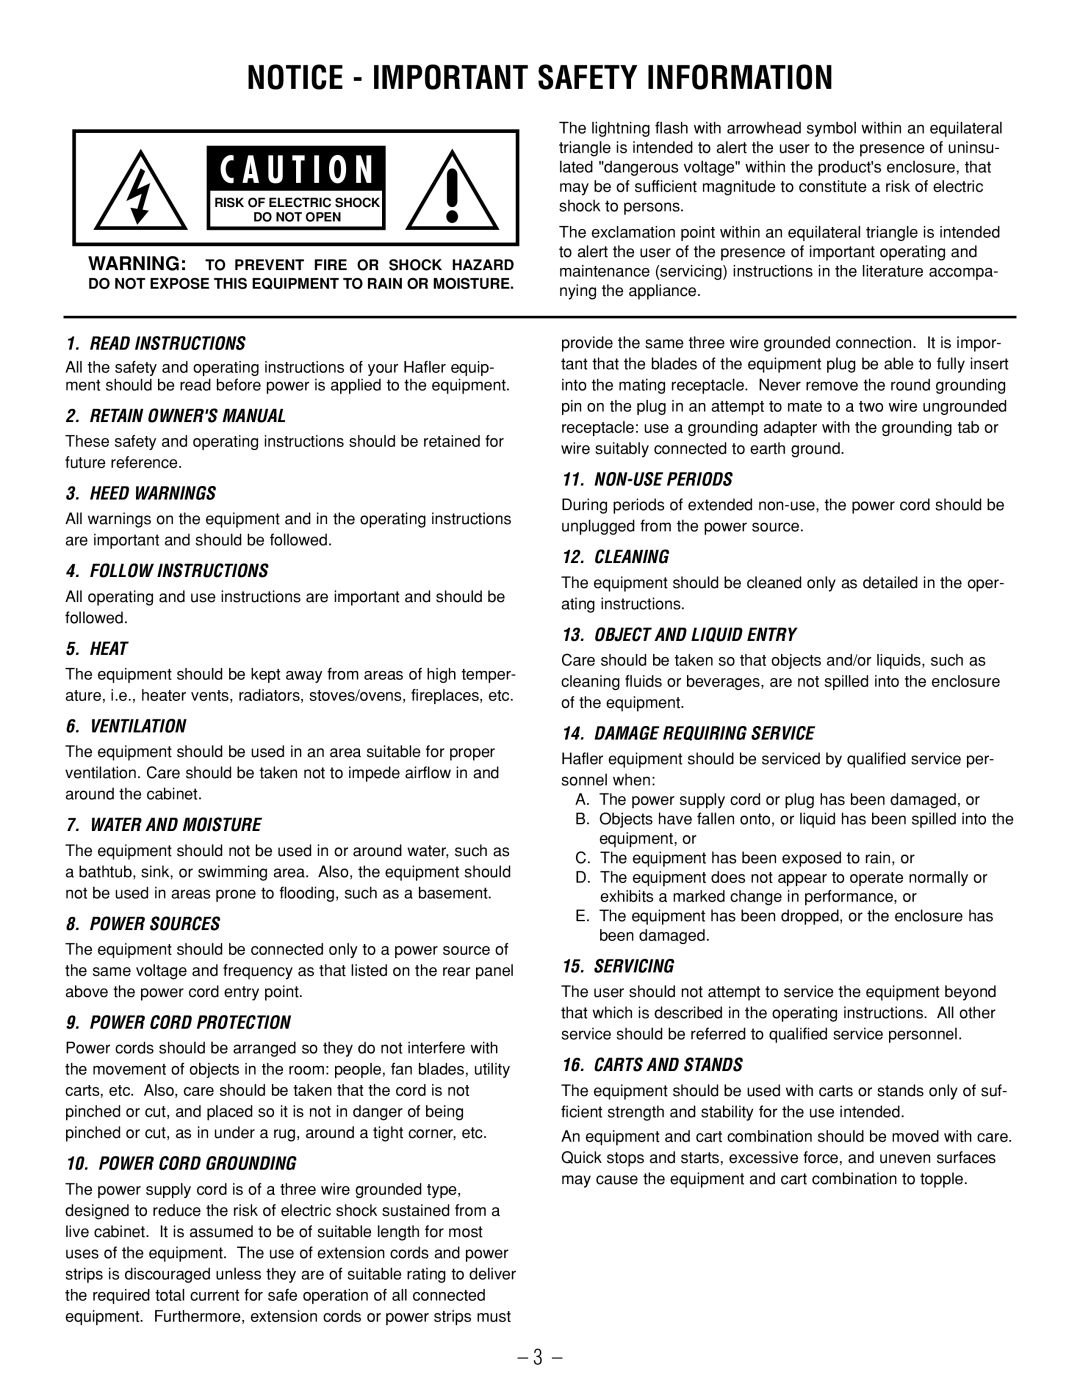 Hafler GX2300CE, GX2600CE manual C A U T I O N, Notice - Important Safety Information 